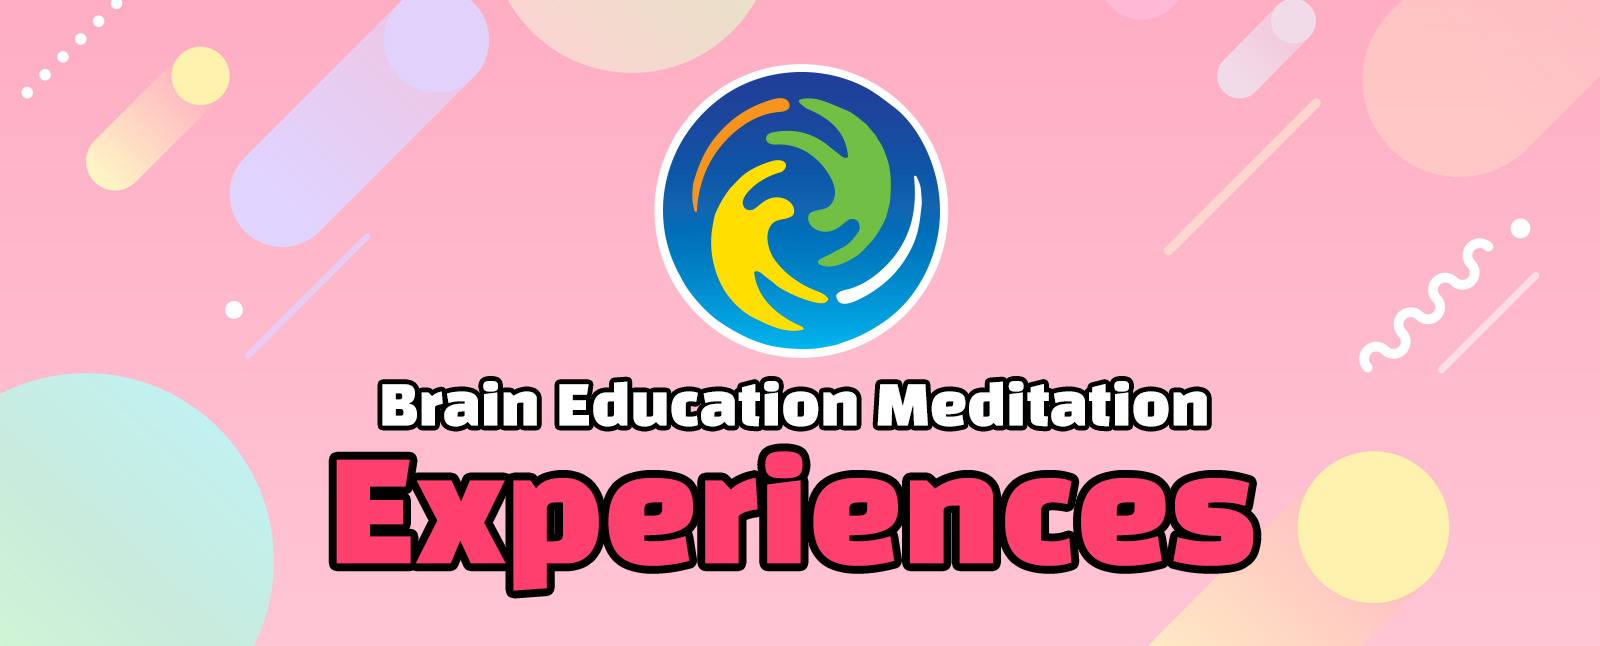 Brain Education Meditation Experiences